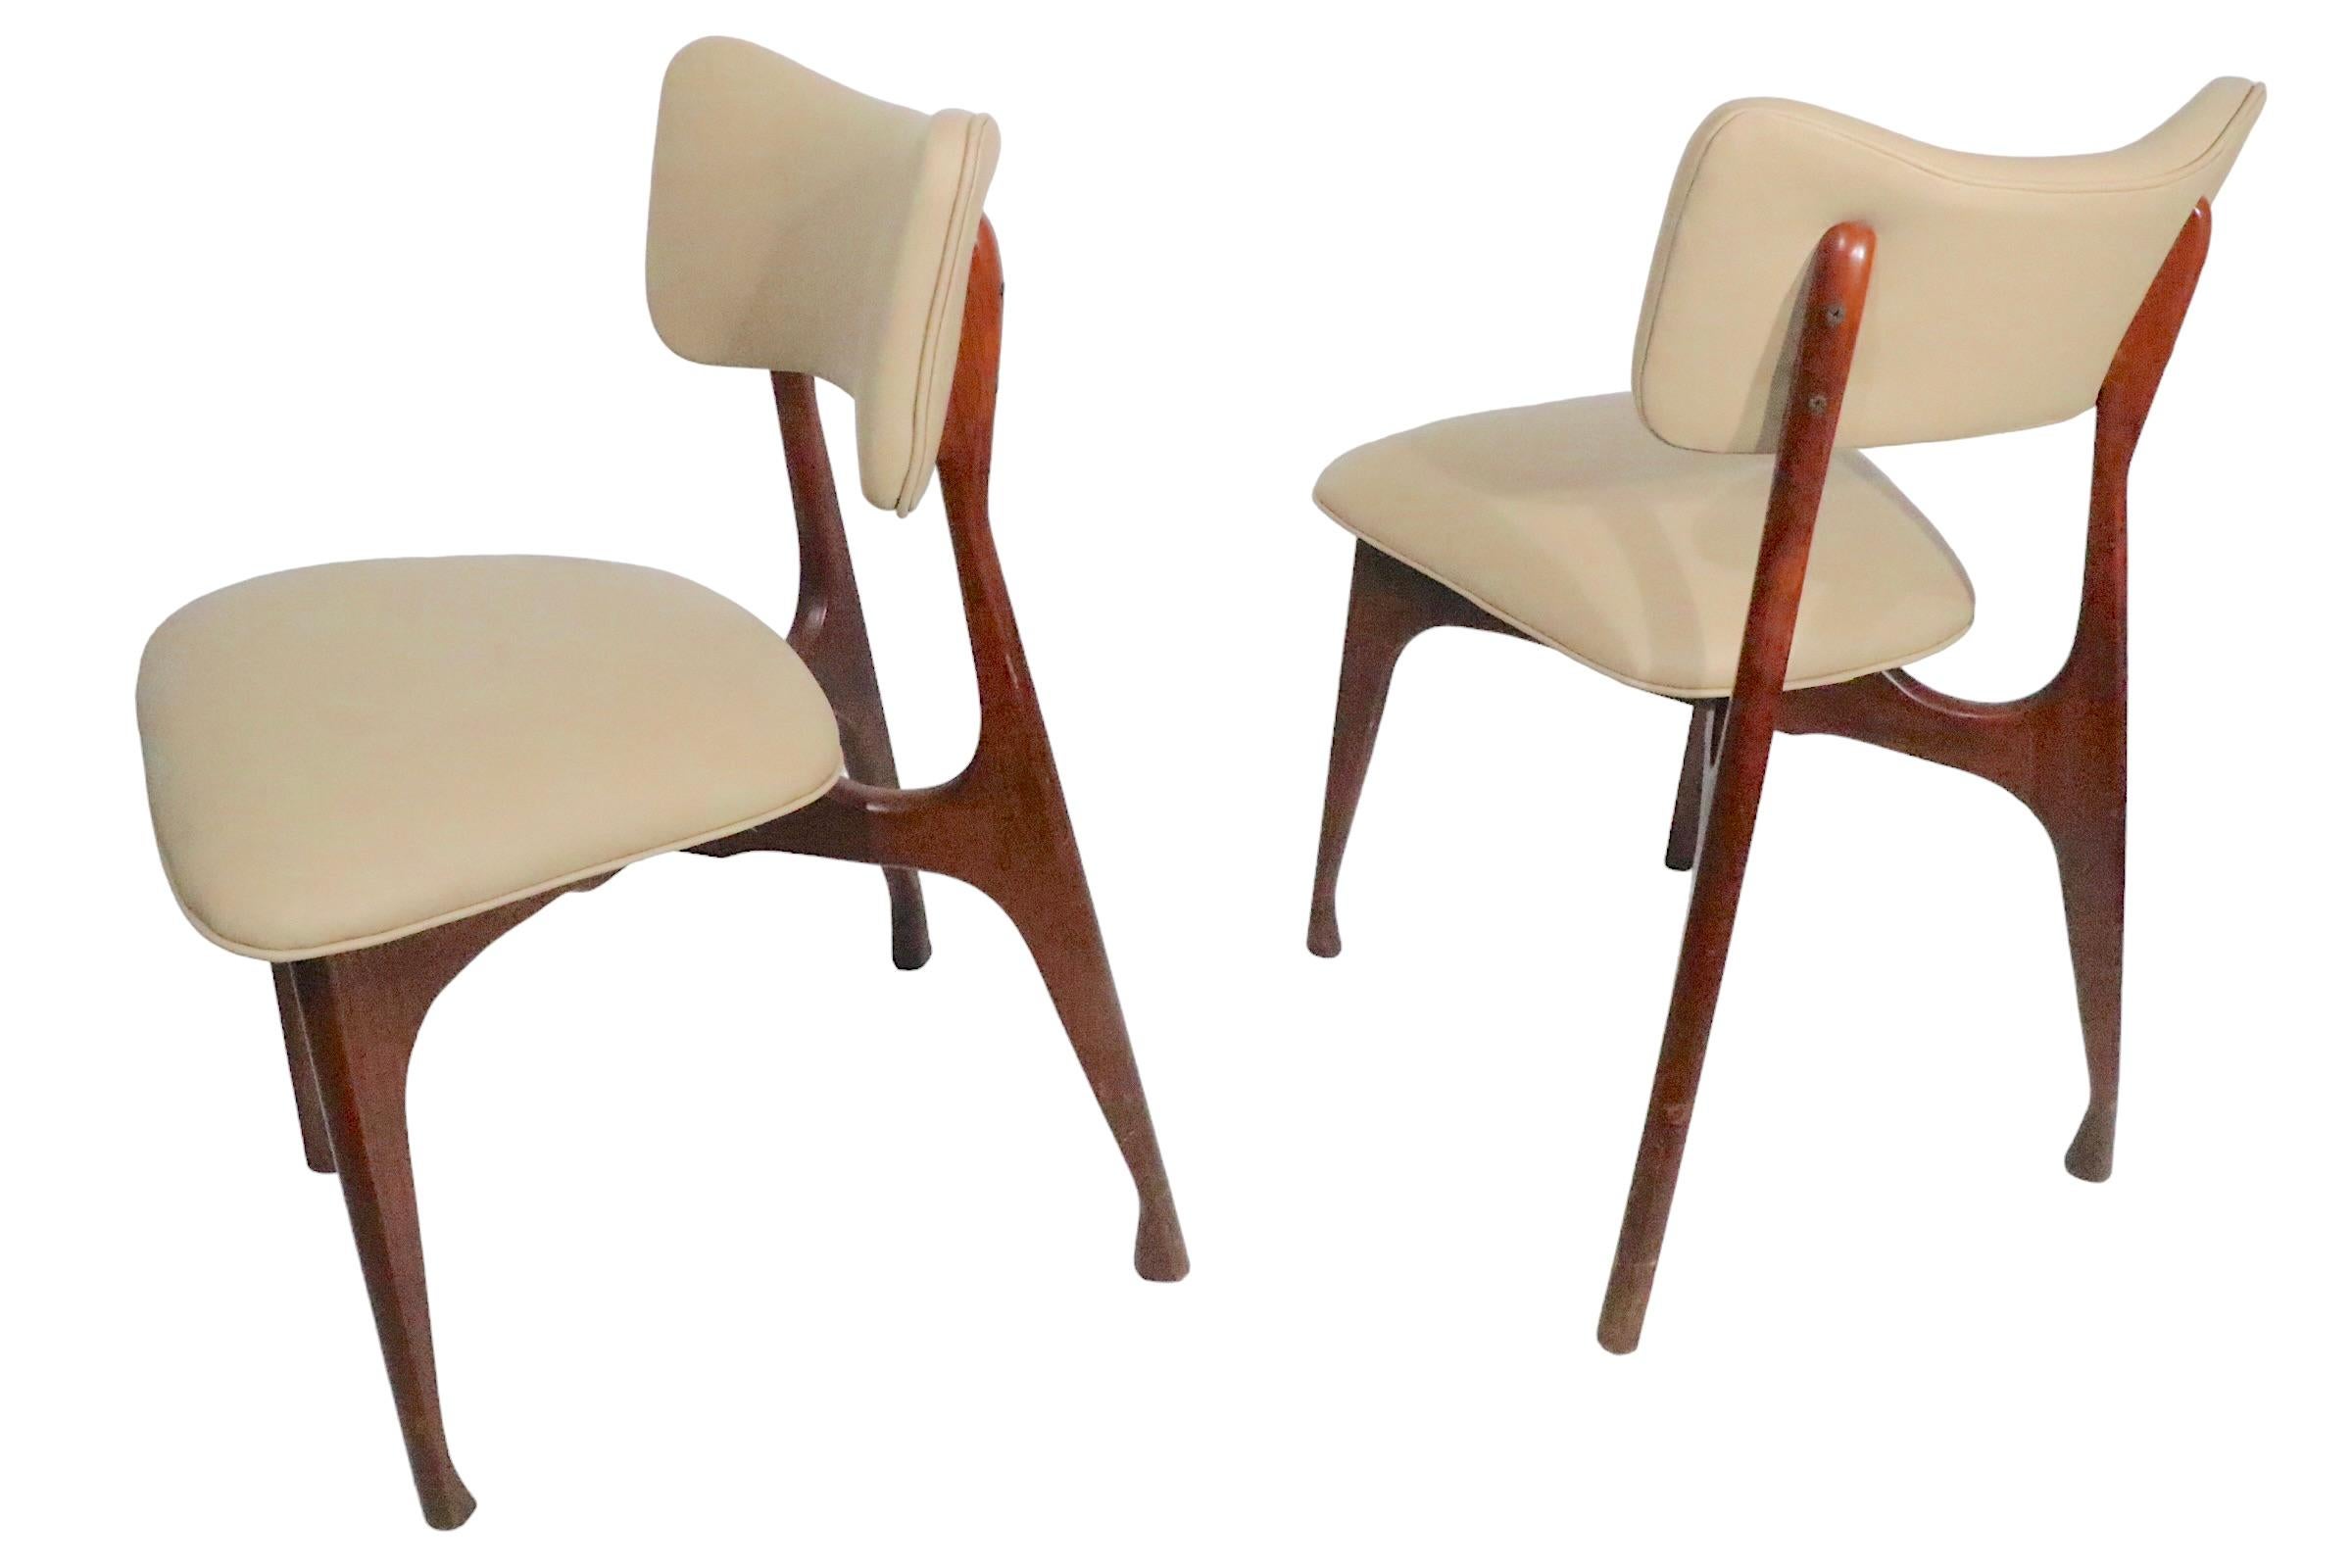 20th Century Pr. Midcentury Dining Side Chairs Att. to Ico Parisi, circa 1950s For Sale